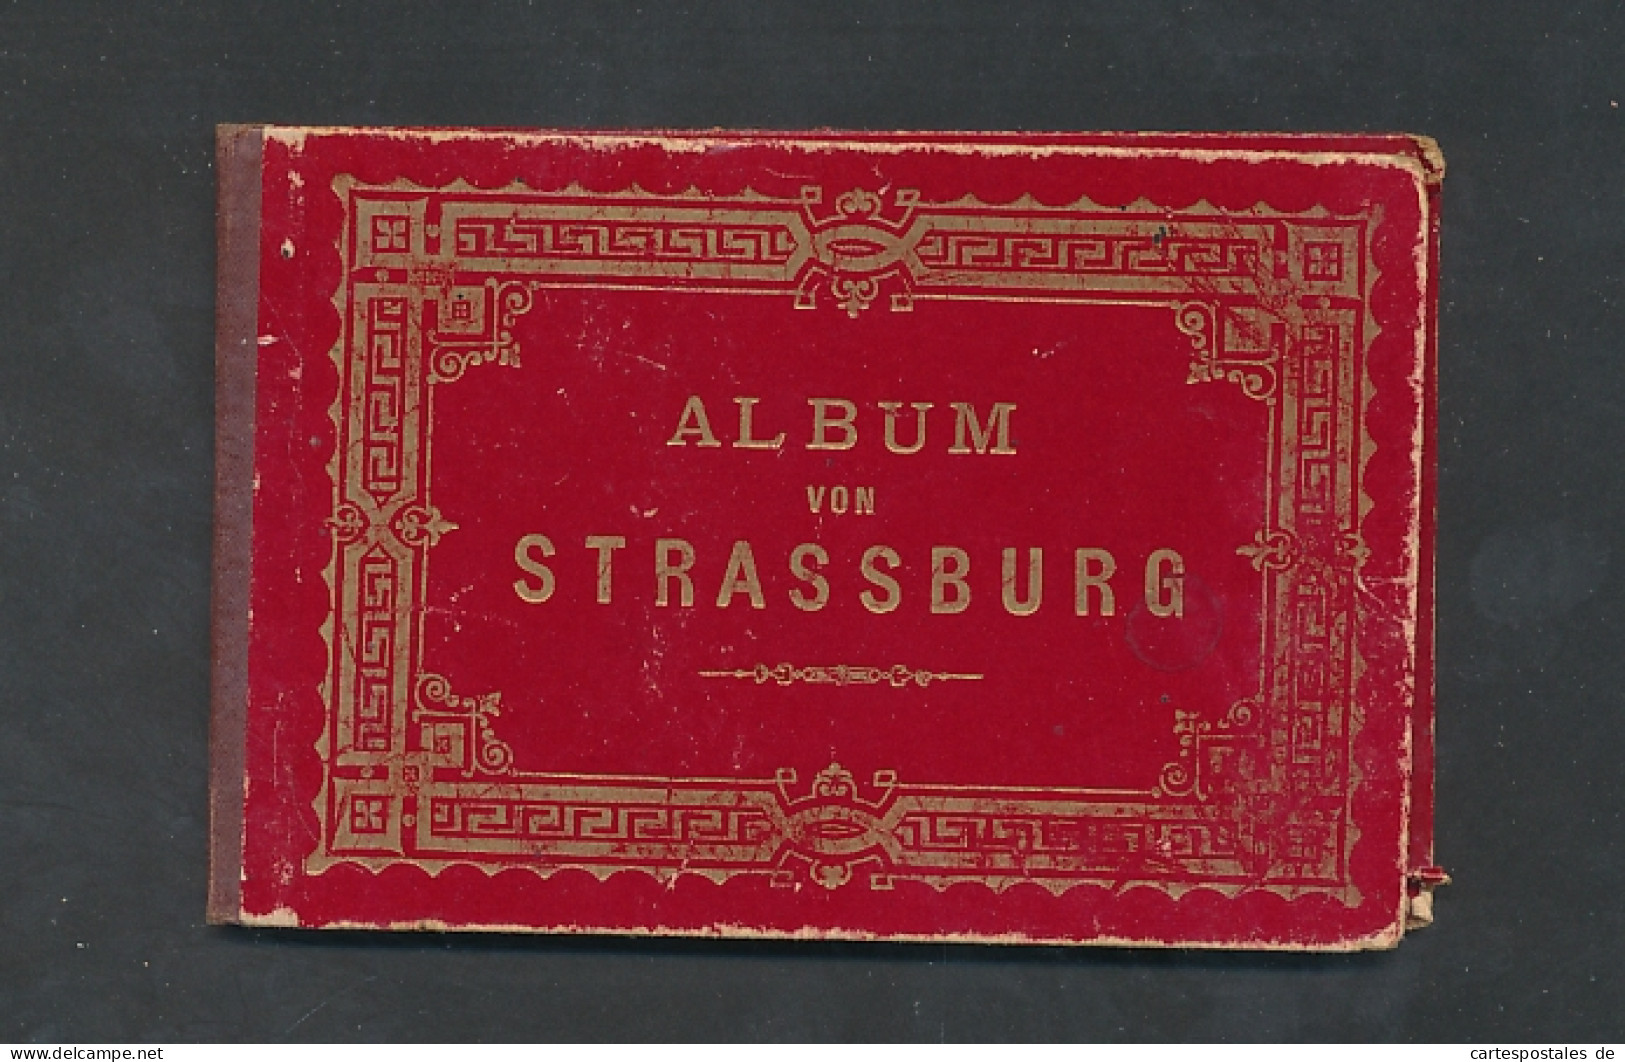 Leporello-Album Strassburg, Lithographien Von Münster, St. Thomas-Kirche, Frauenhaus, Etc.  - Litografia